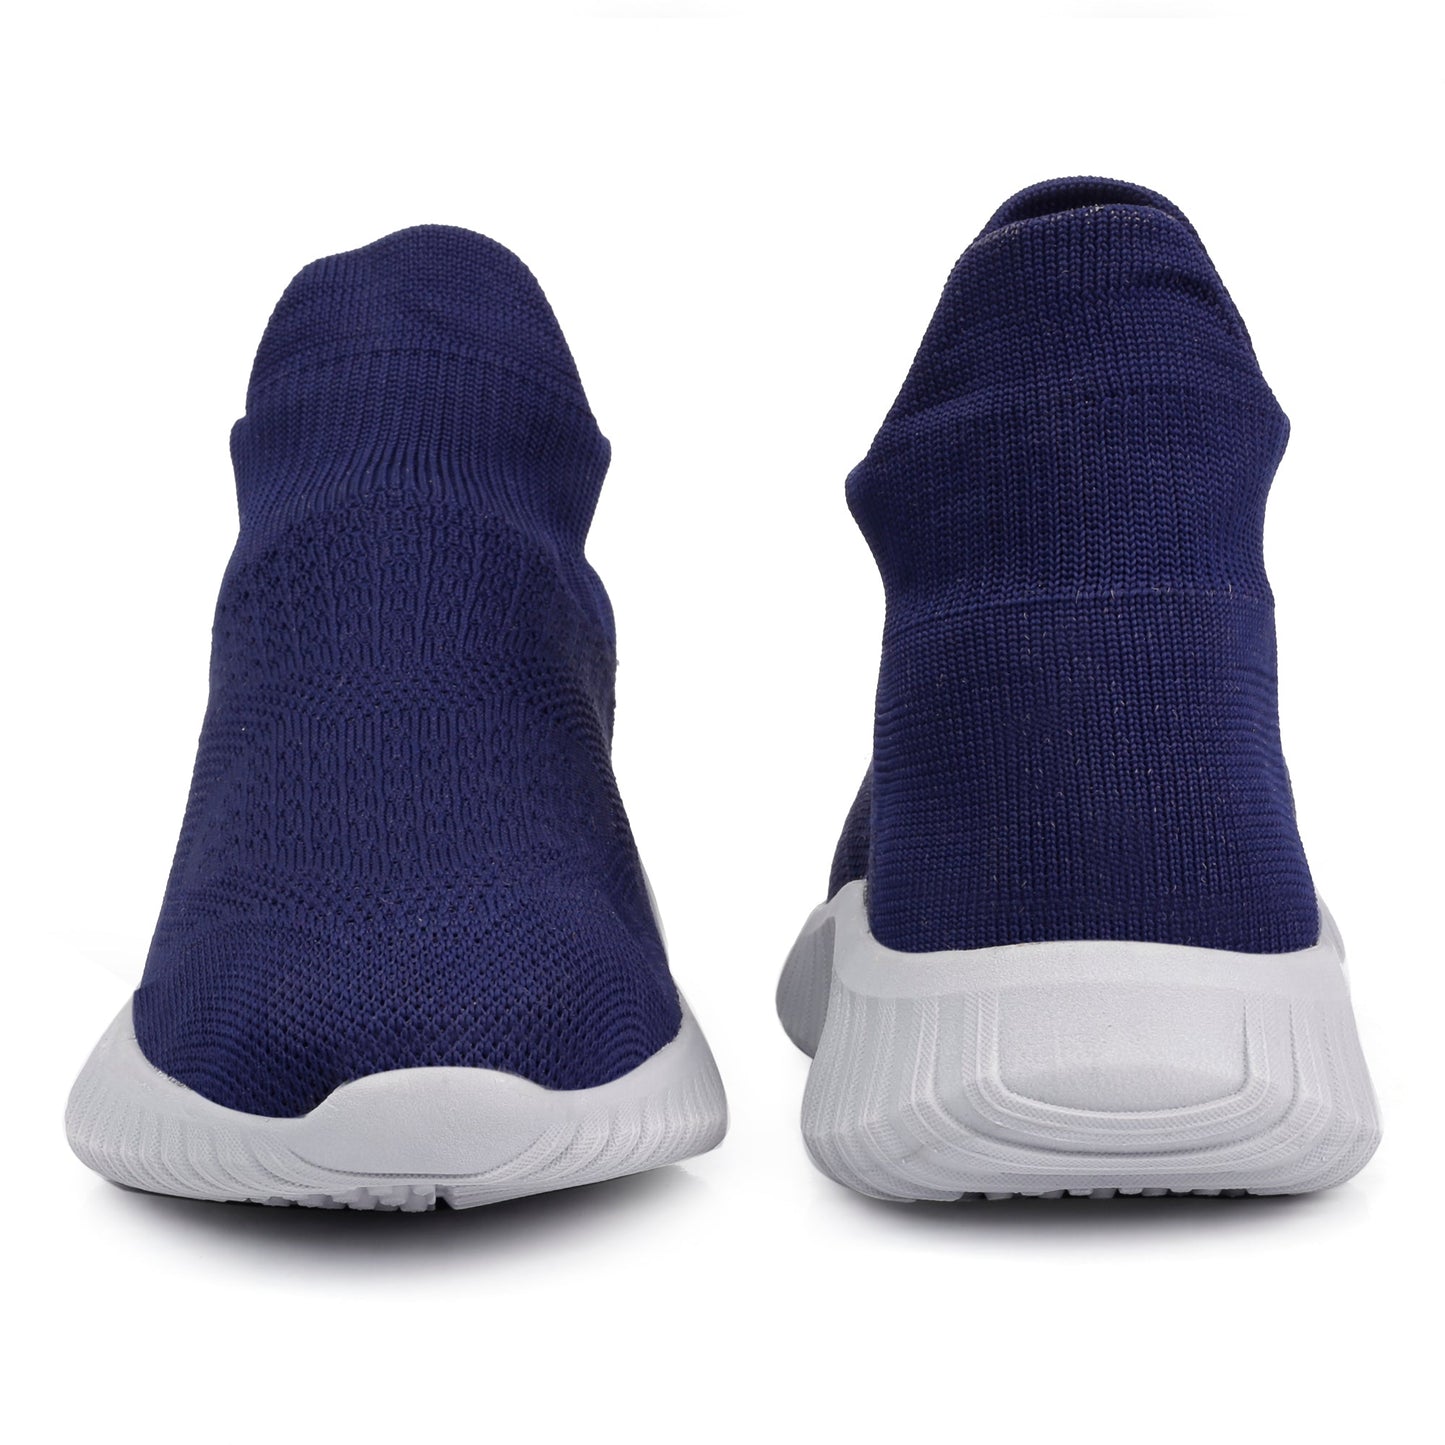 Men's Latest Fashionable Casual Socks Shoes